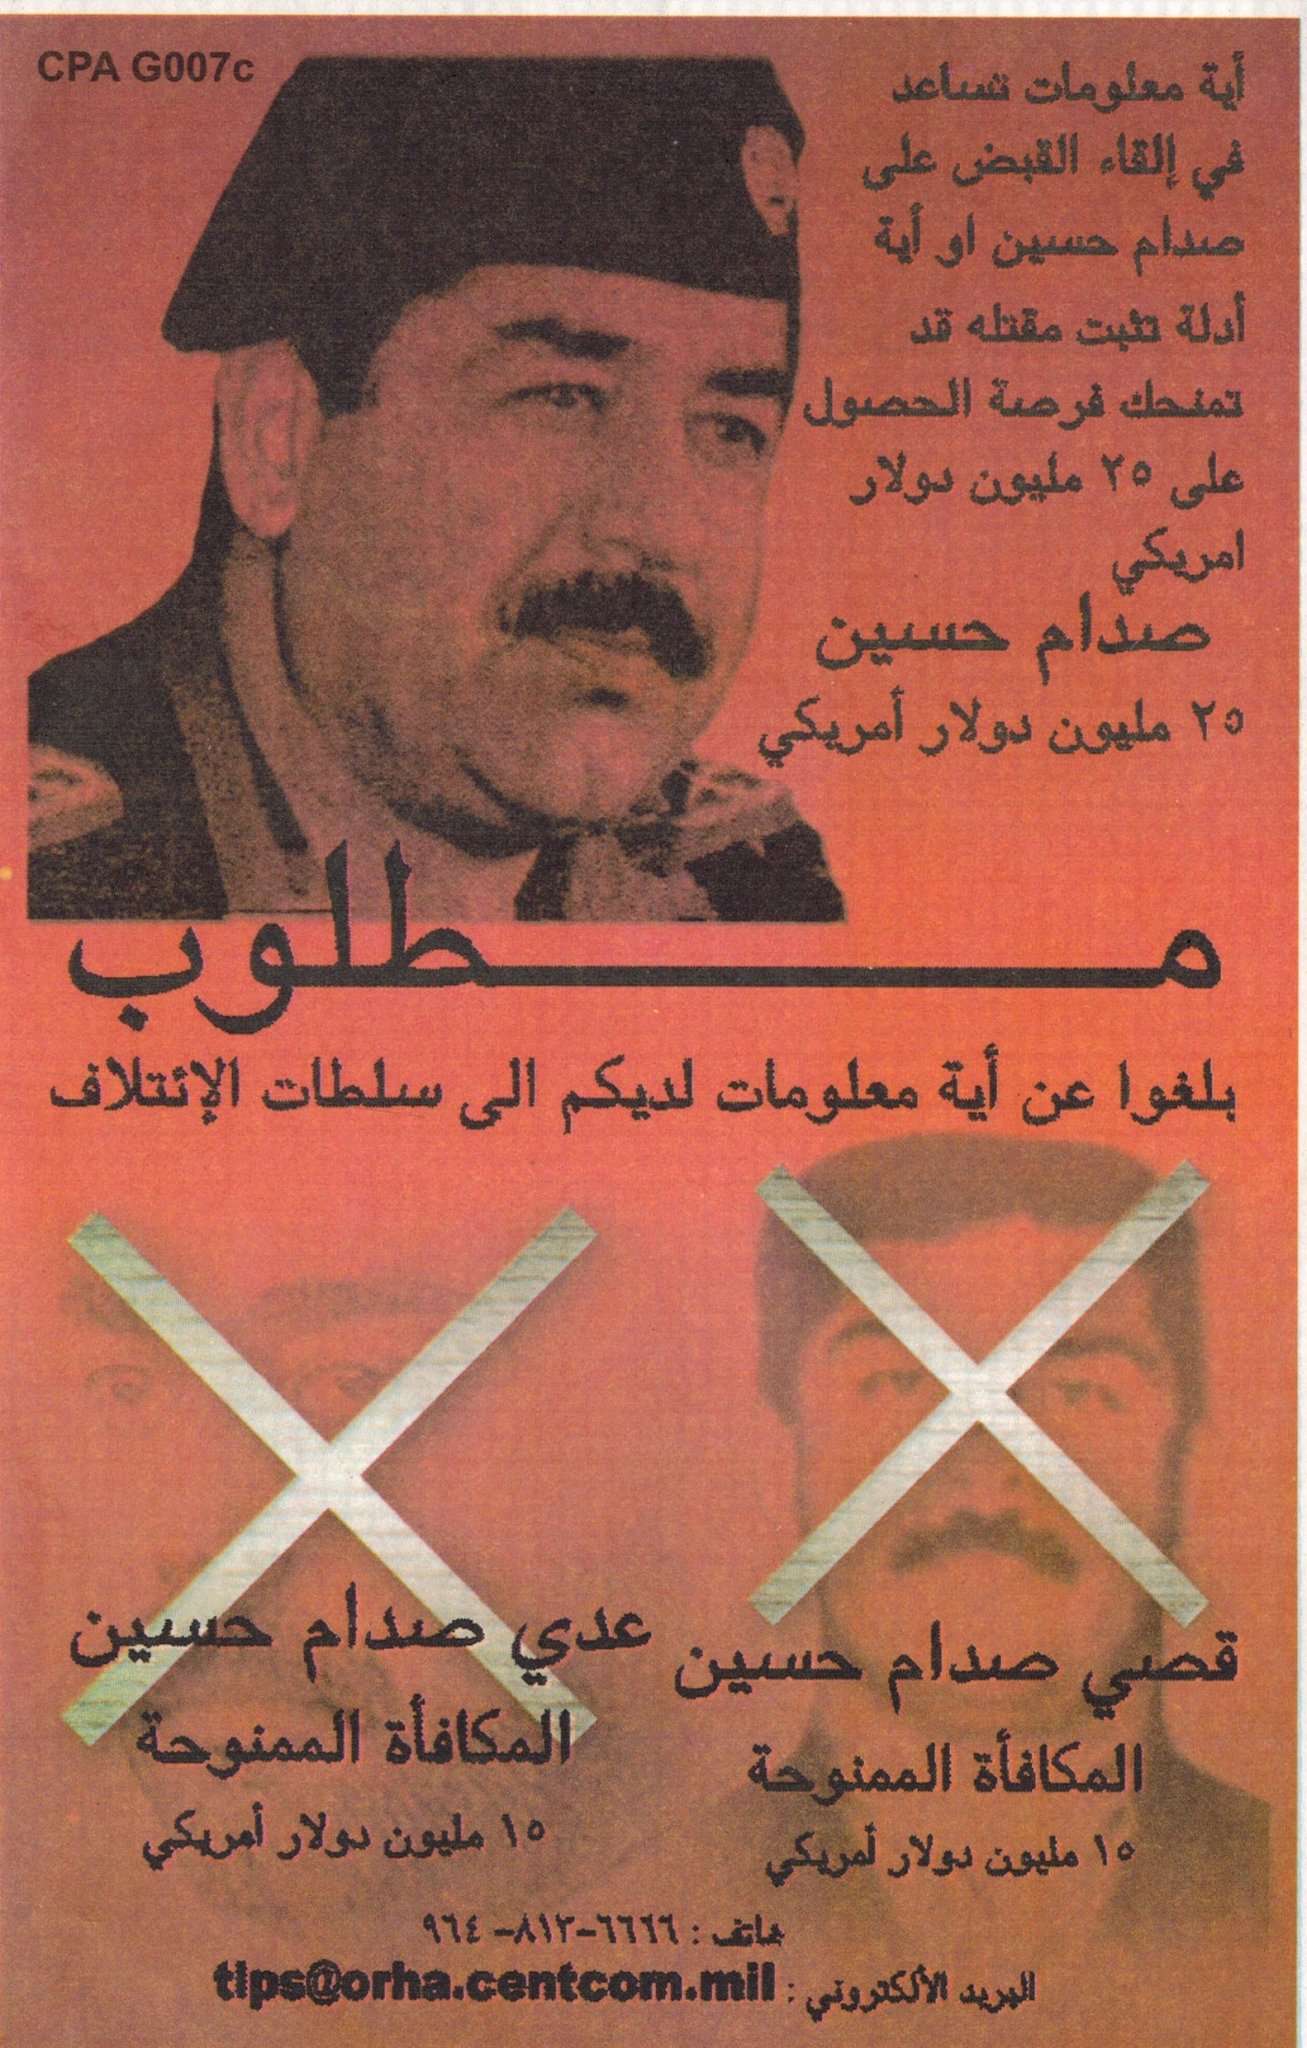 Saddam Hussein leaflet.jpg